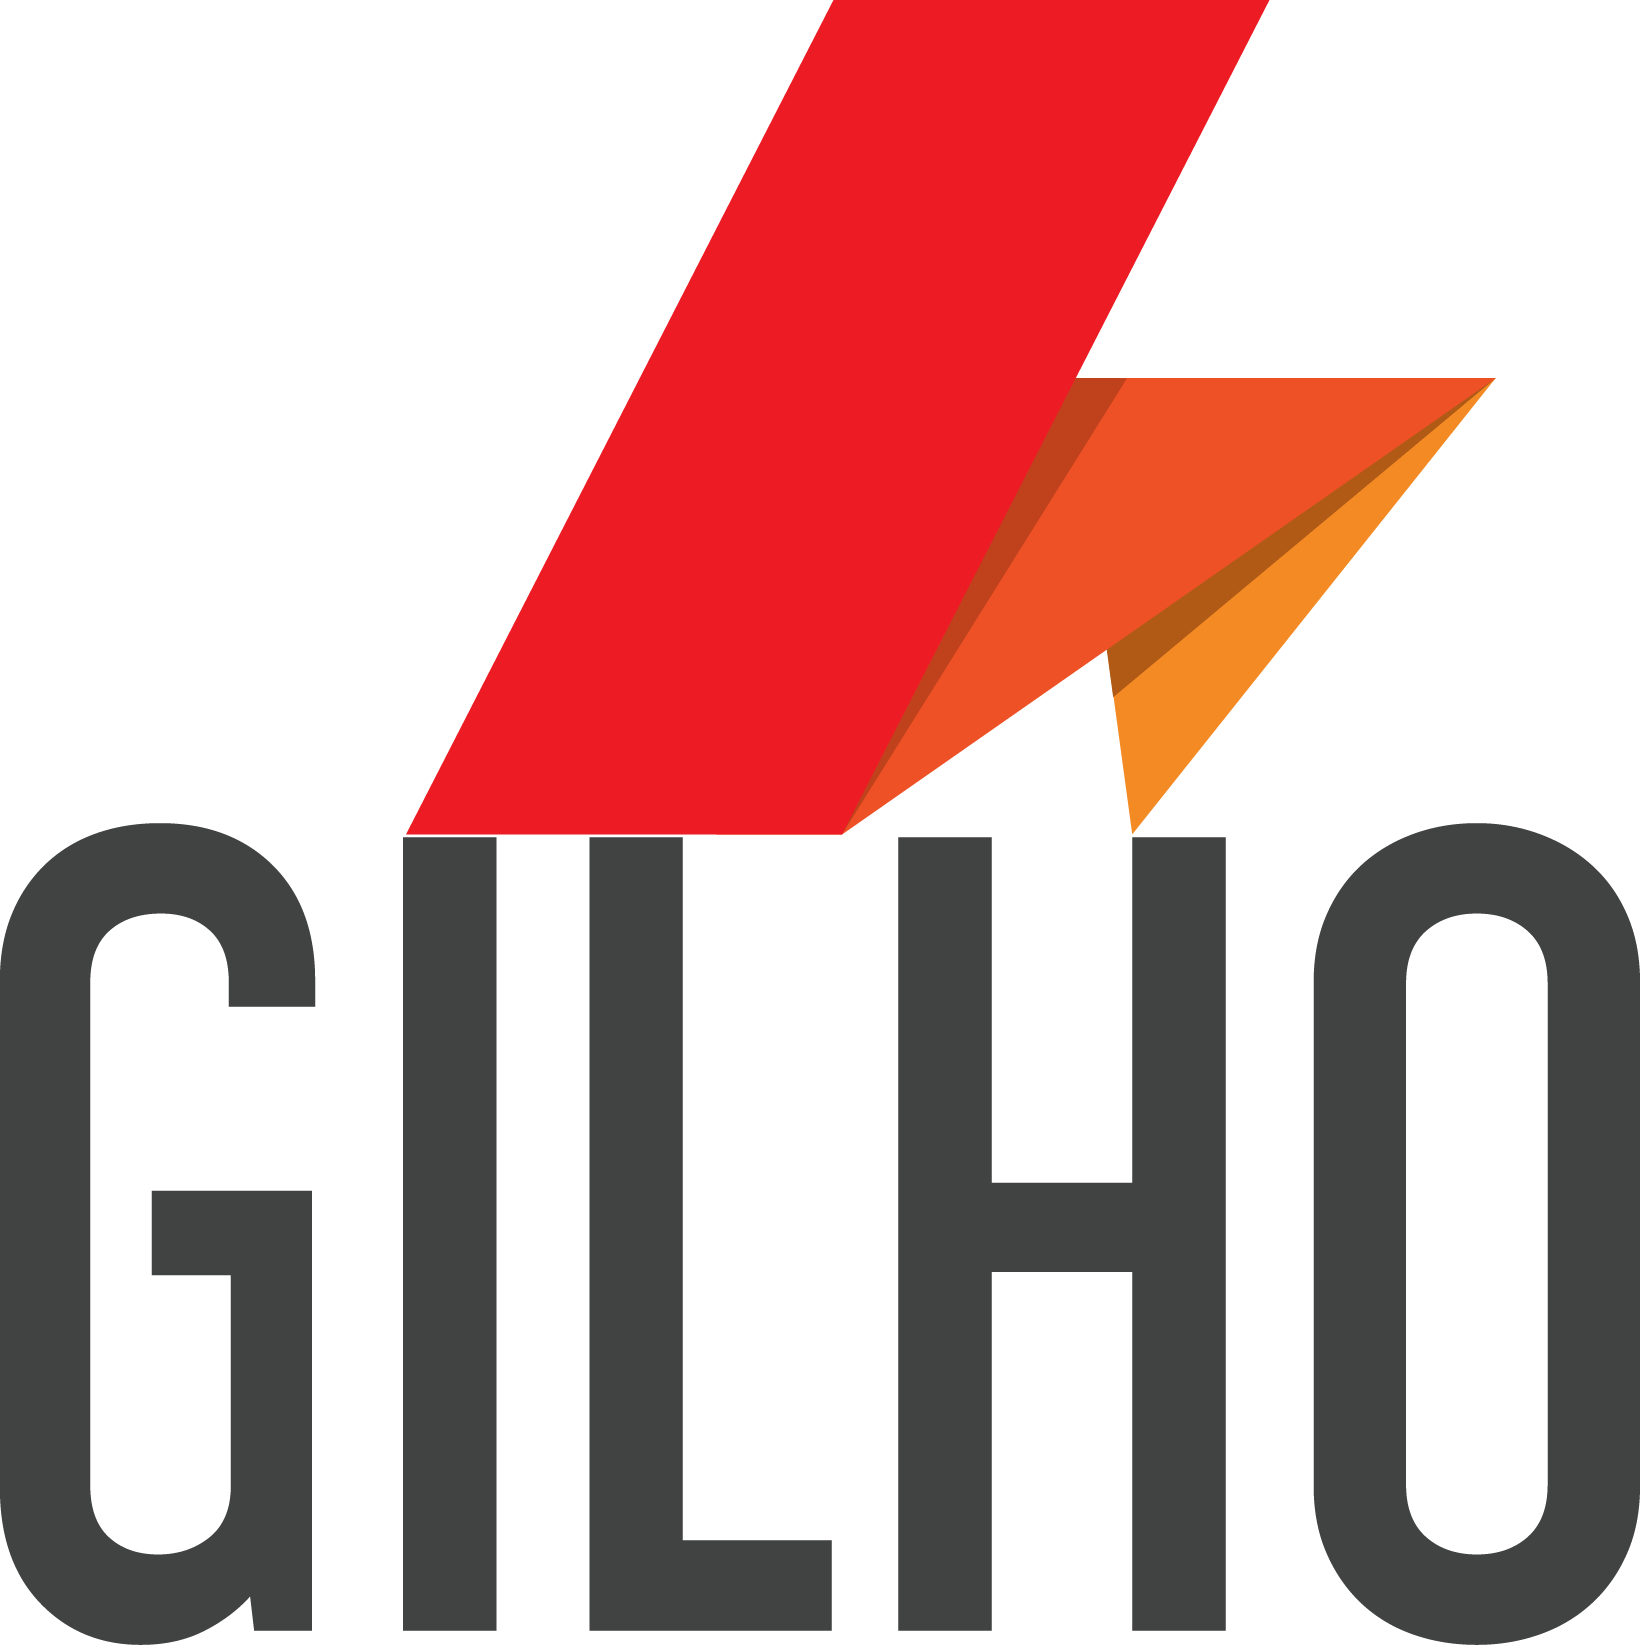 gilho.com is for sale